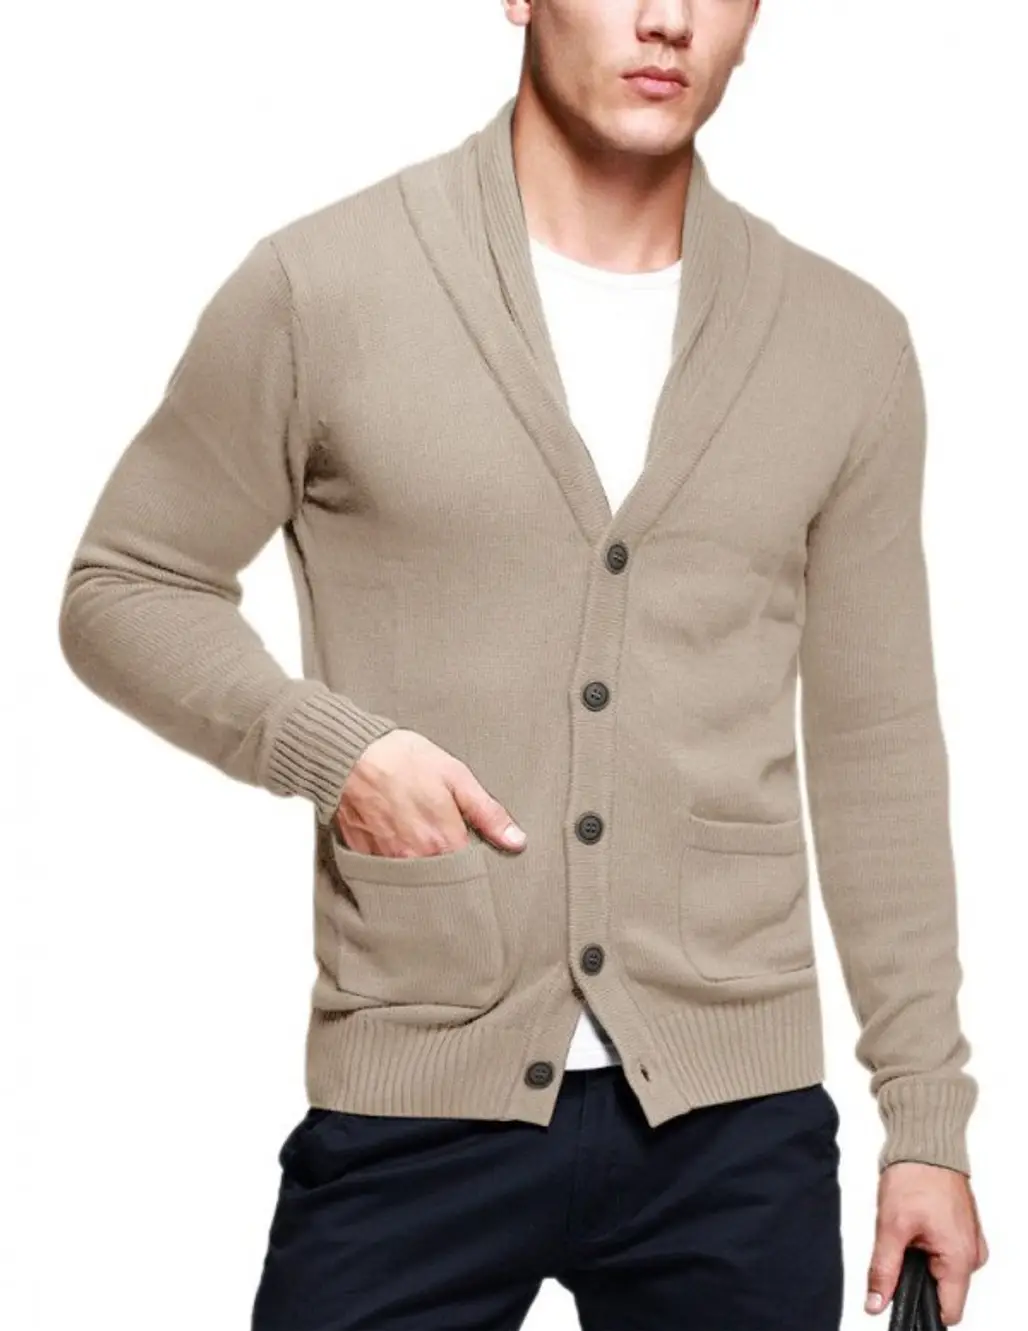 clothing, outerwear, jacket, sleeve, sweater,